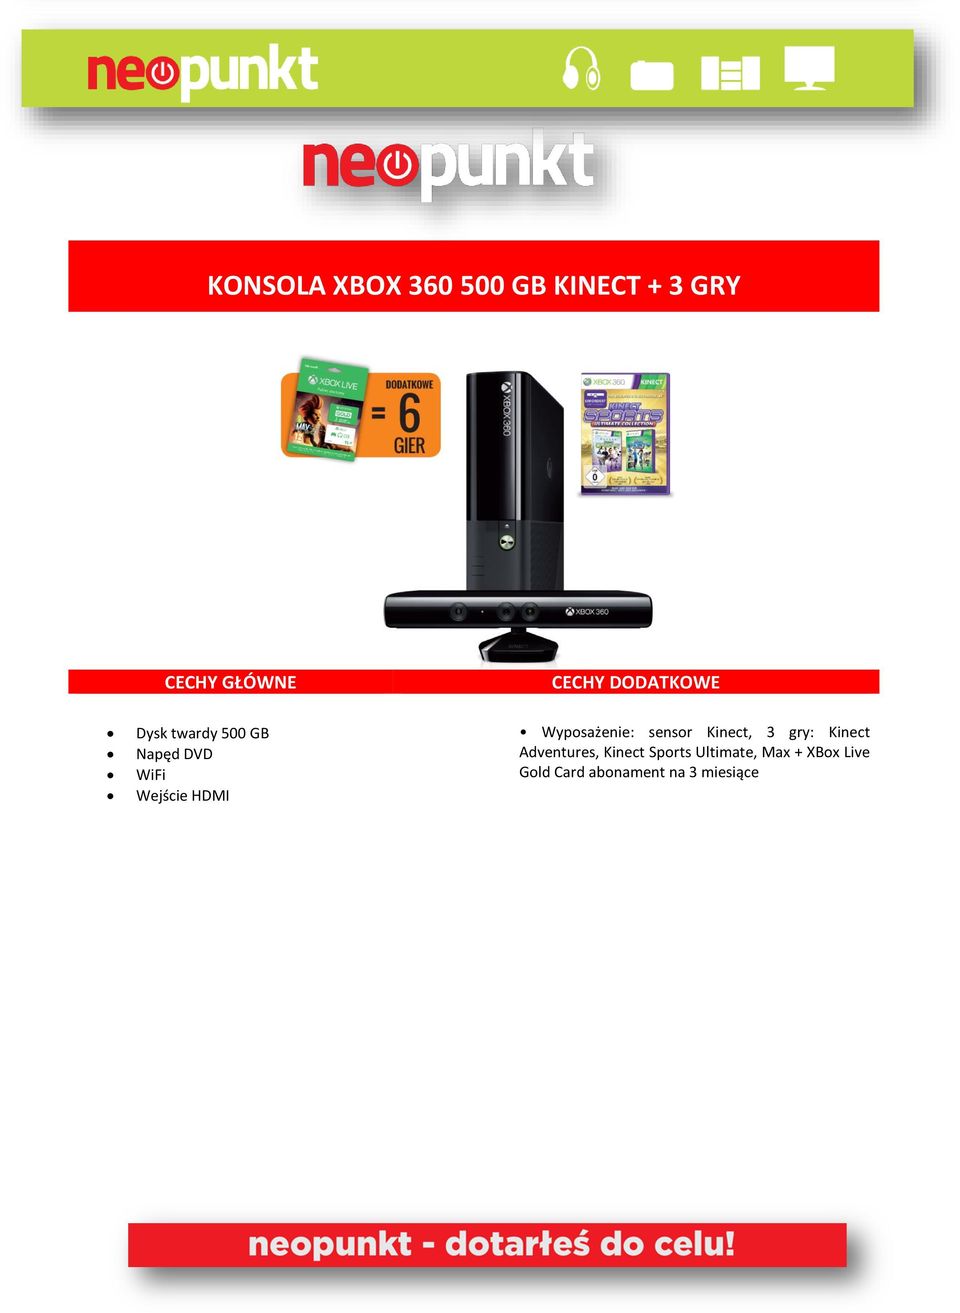 Wyposażenie: sensor Kinect, 3 gry: Kinect Adventures, Kinect